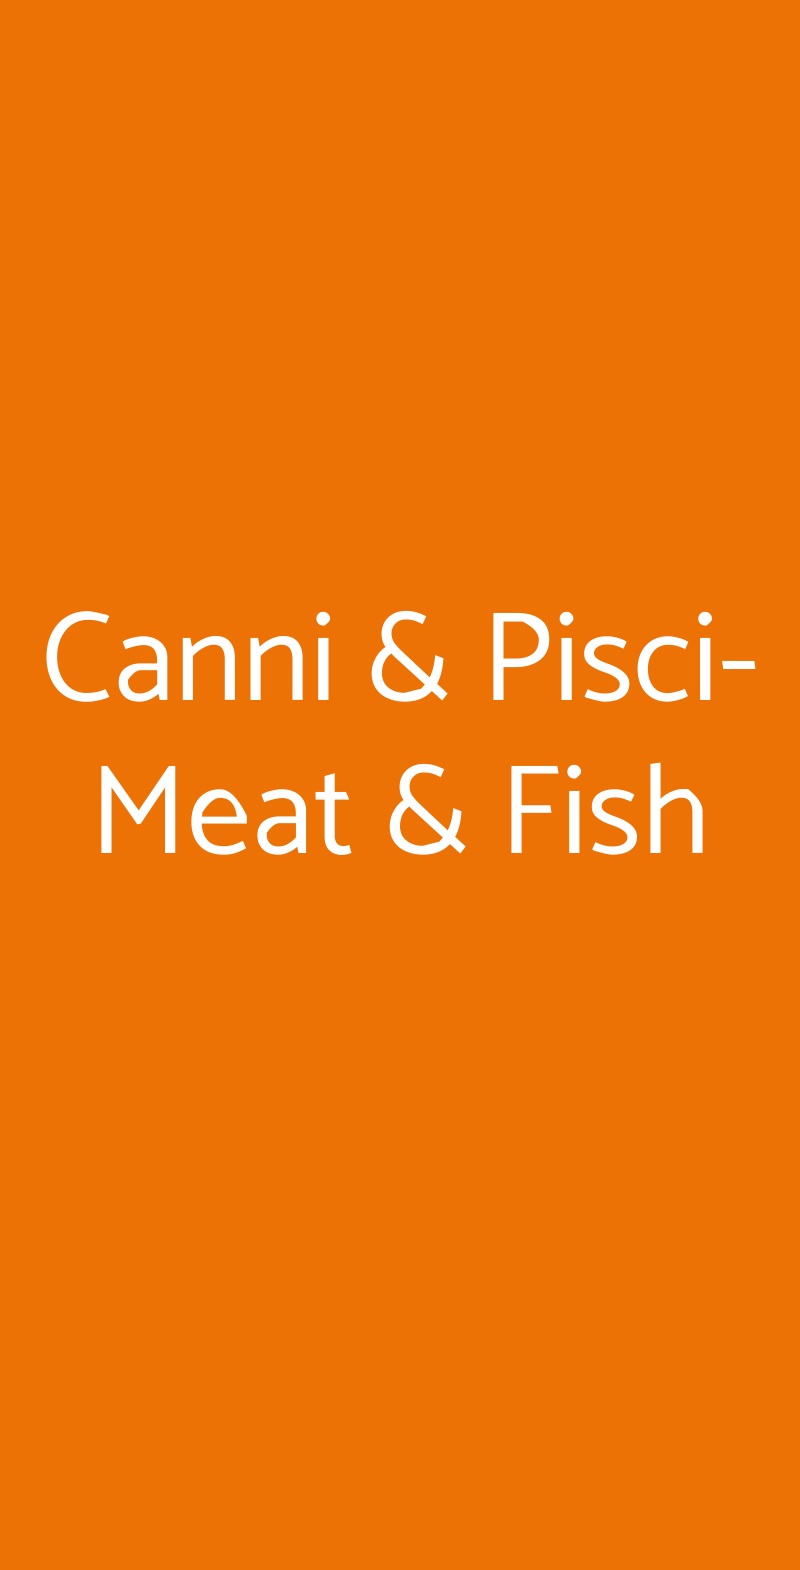 Canni & Pisci-Meat & Fish Catania menù 1 pagina